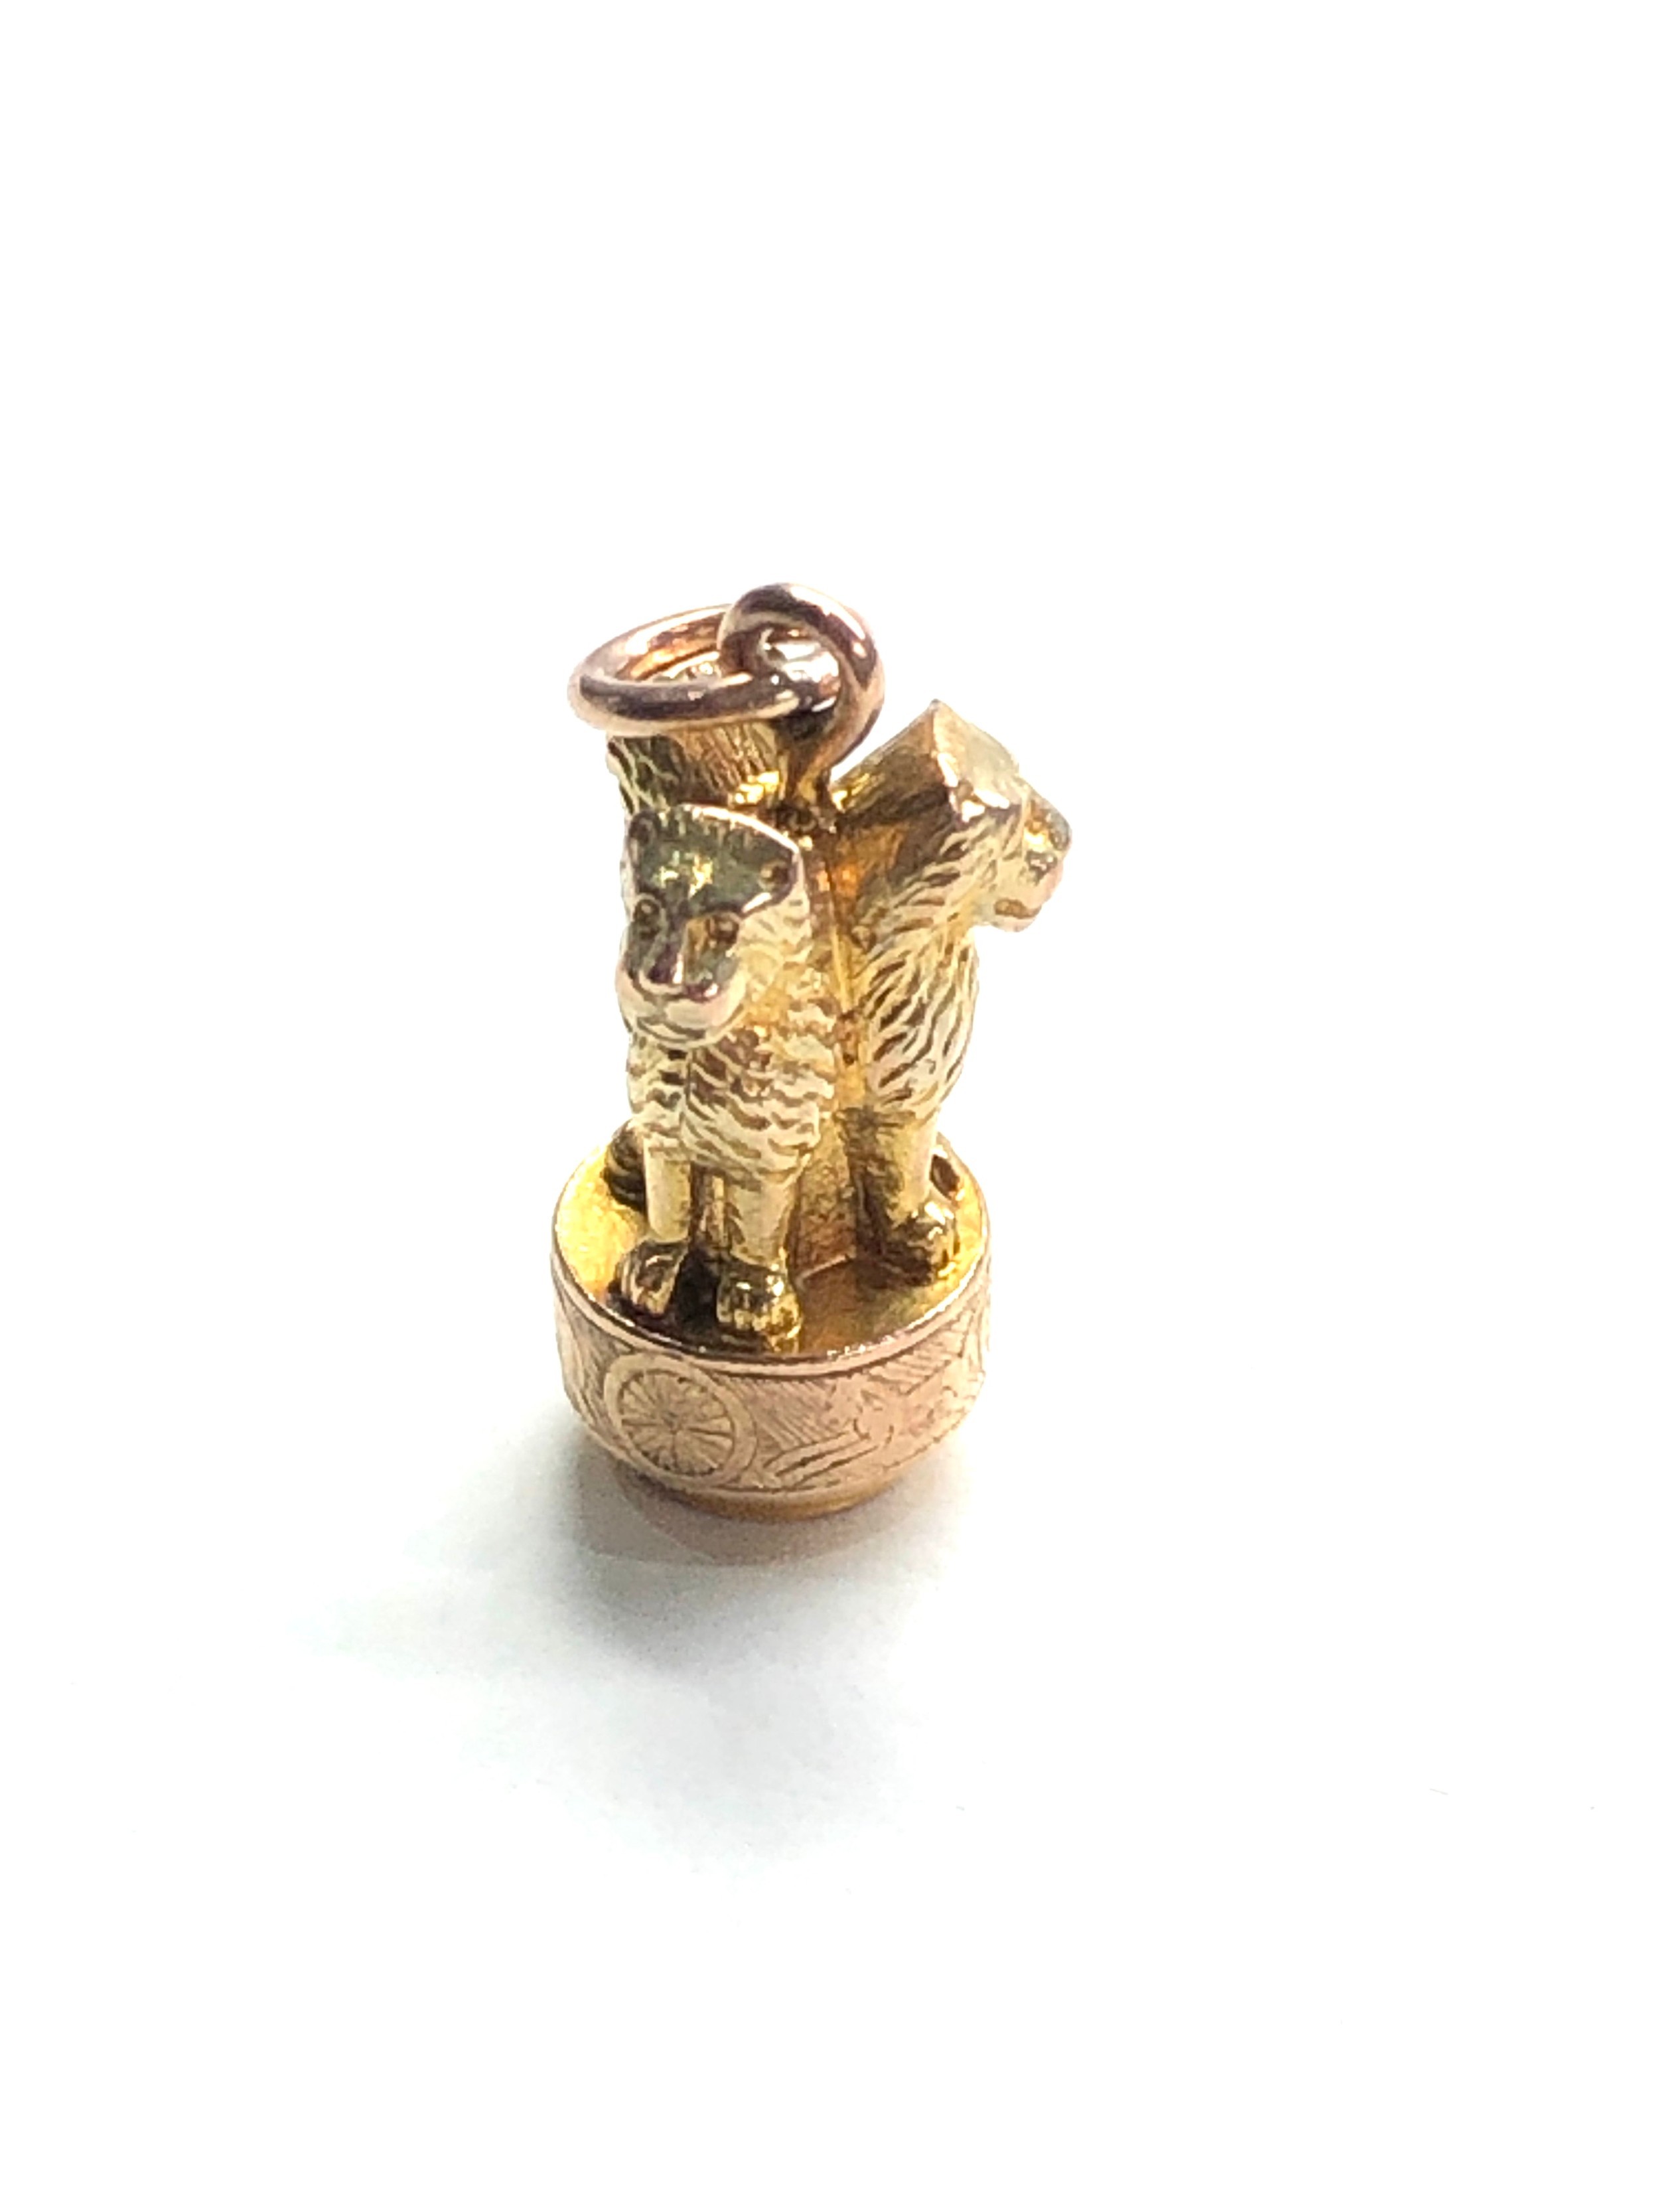 Antique 9ct gold lion seal charm 5.1g